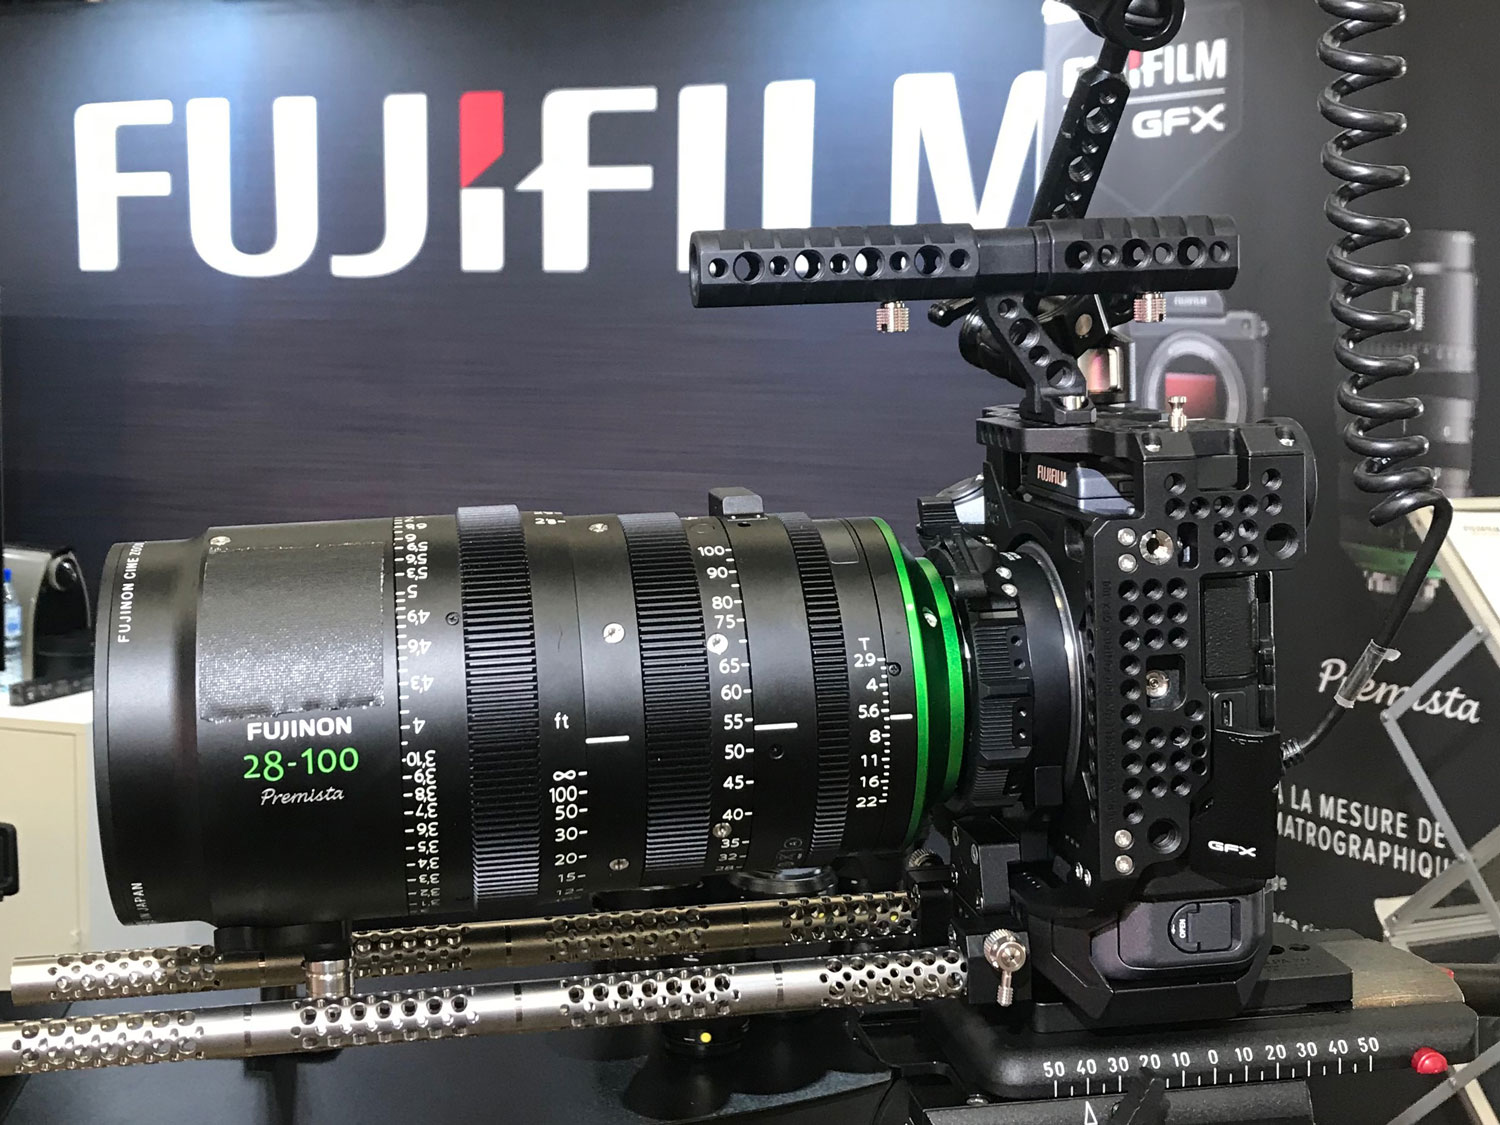 Tests of the new Fujifilm GFX 100 camera body with the Fujinon Premista  28-100mm zoom lens - Afcinema